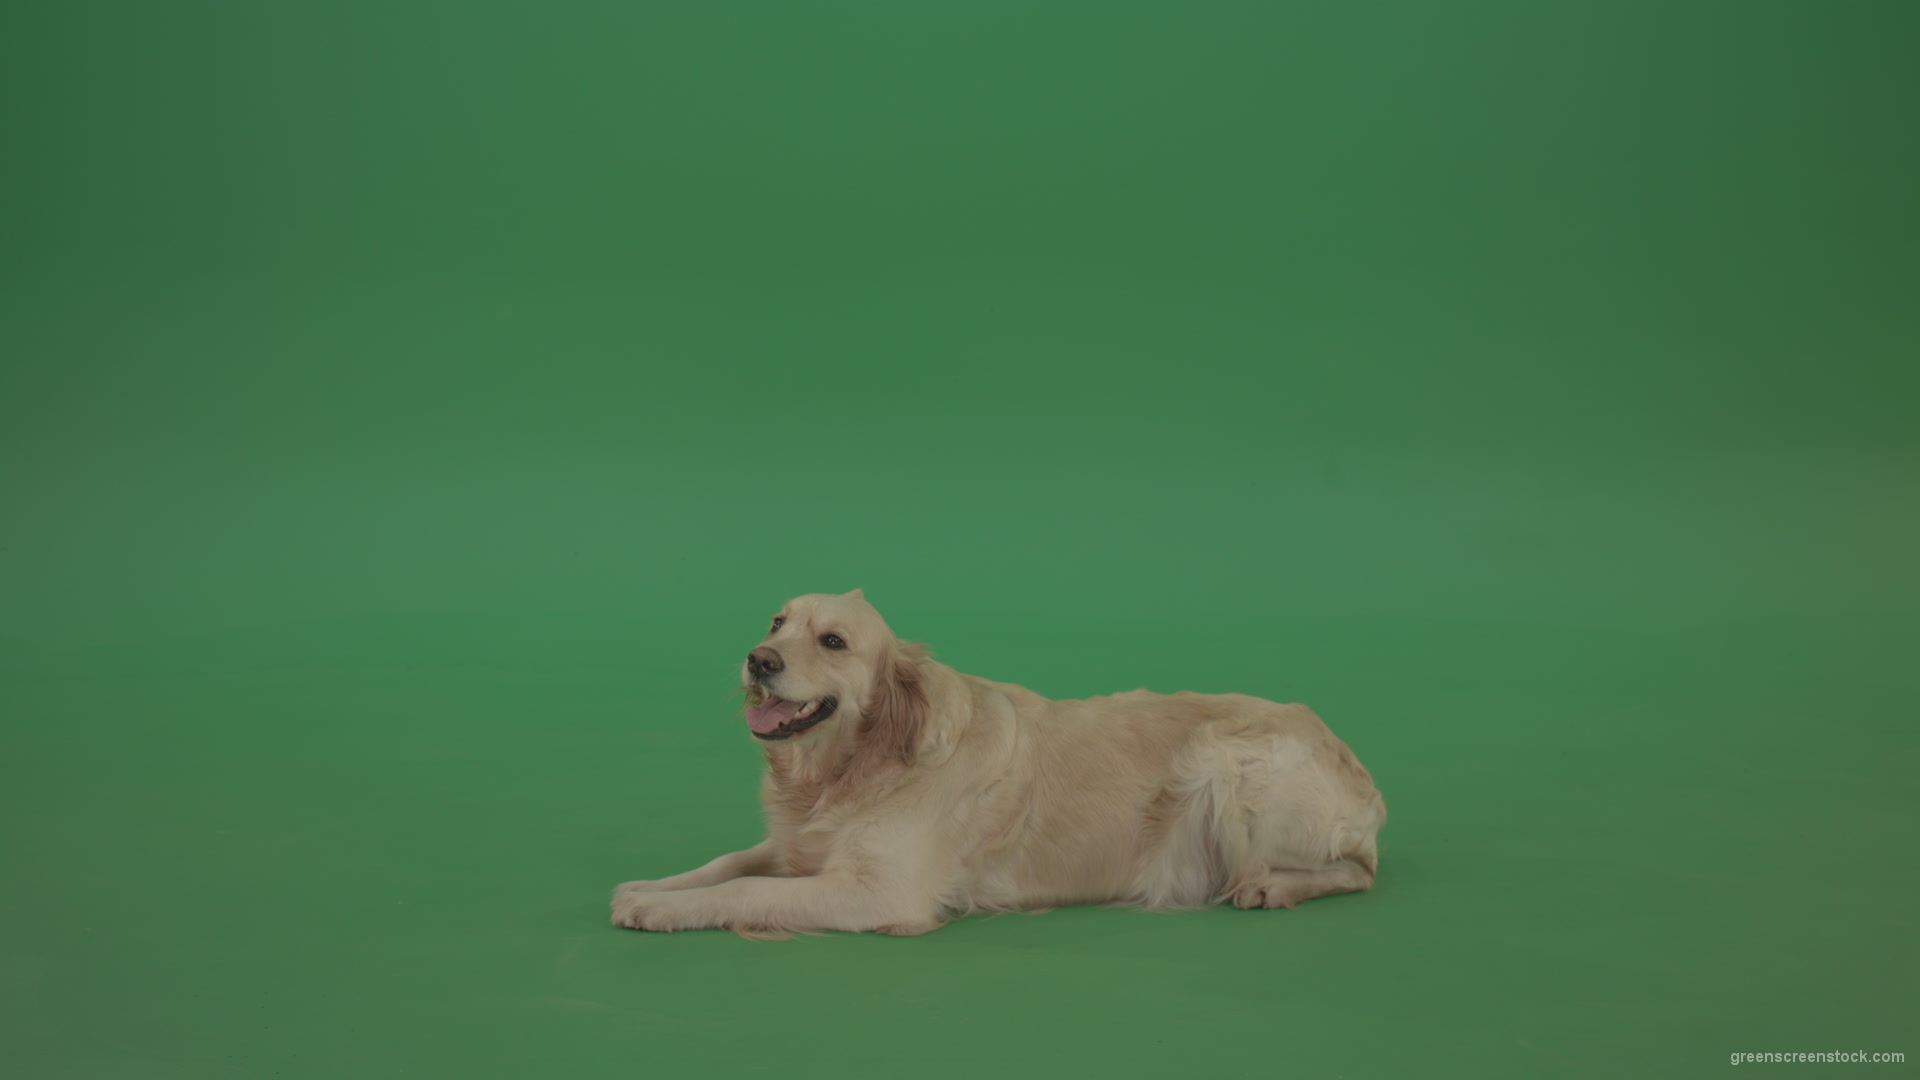 Golden-Retriever-Gun-Dog-Bird-Dog-lying-green-floor-isolated-on-green-screen_001 Green Screen Stock